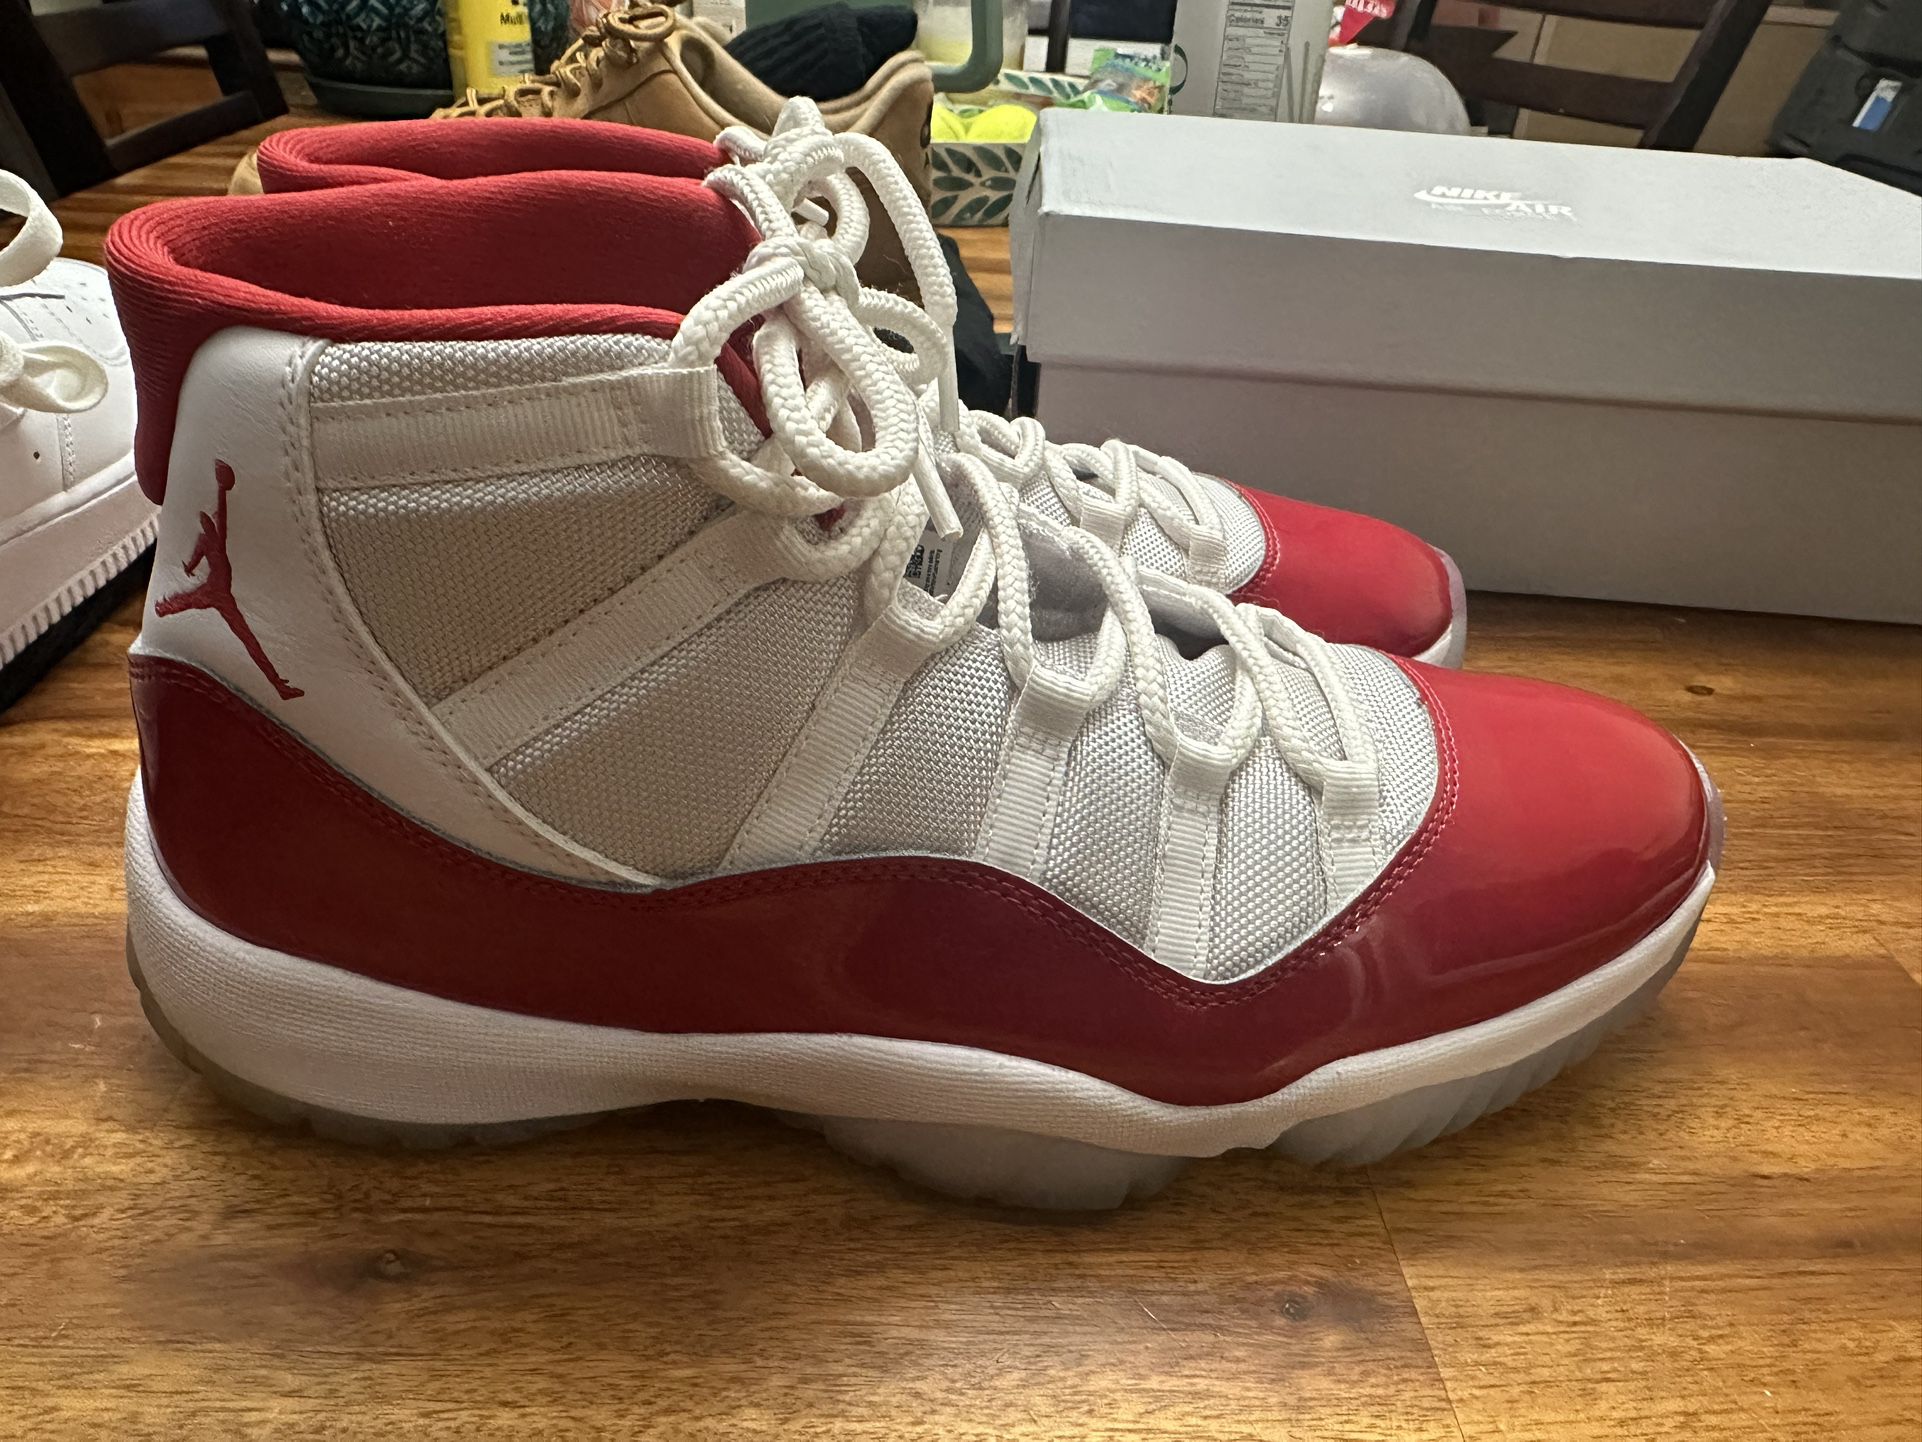 Jordan 11 Cherry Red Size 11 